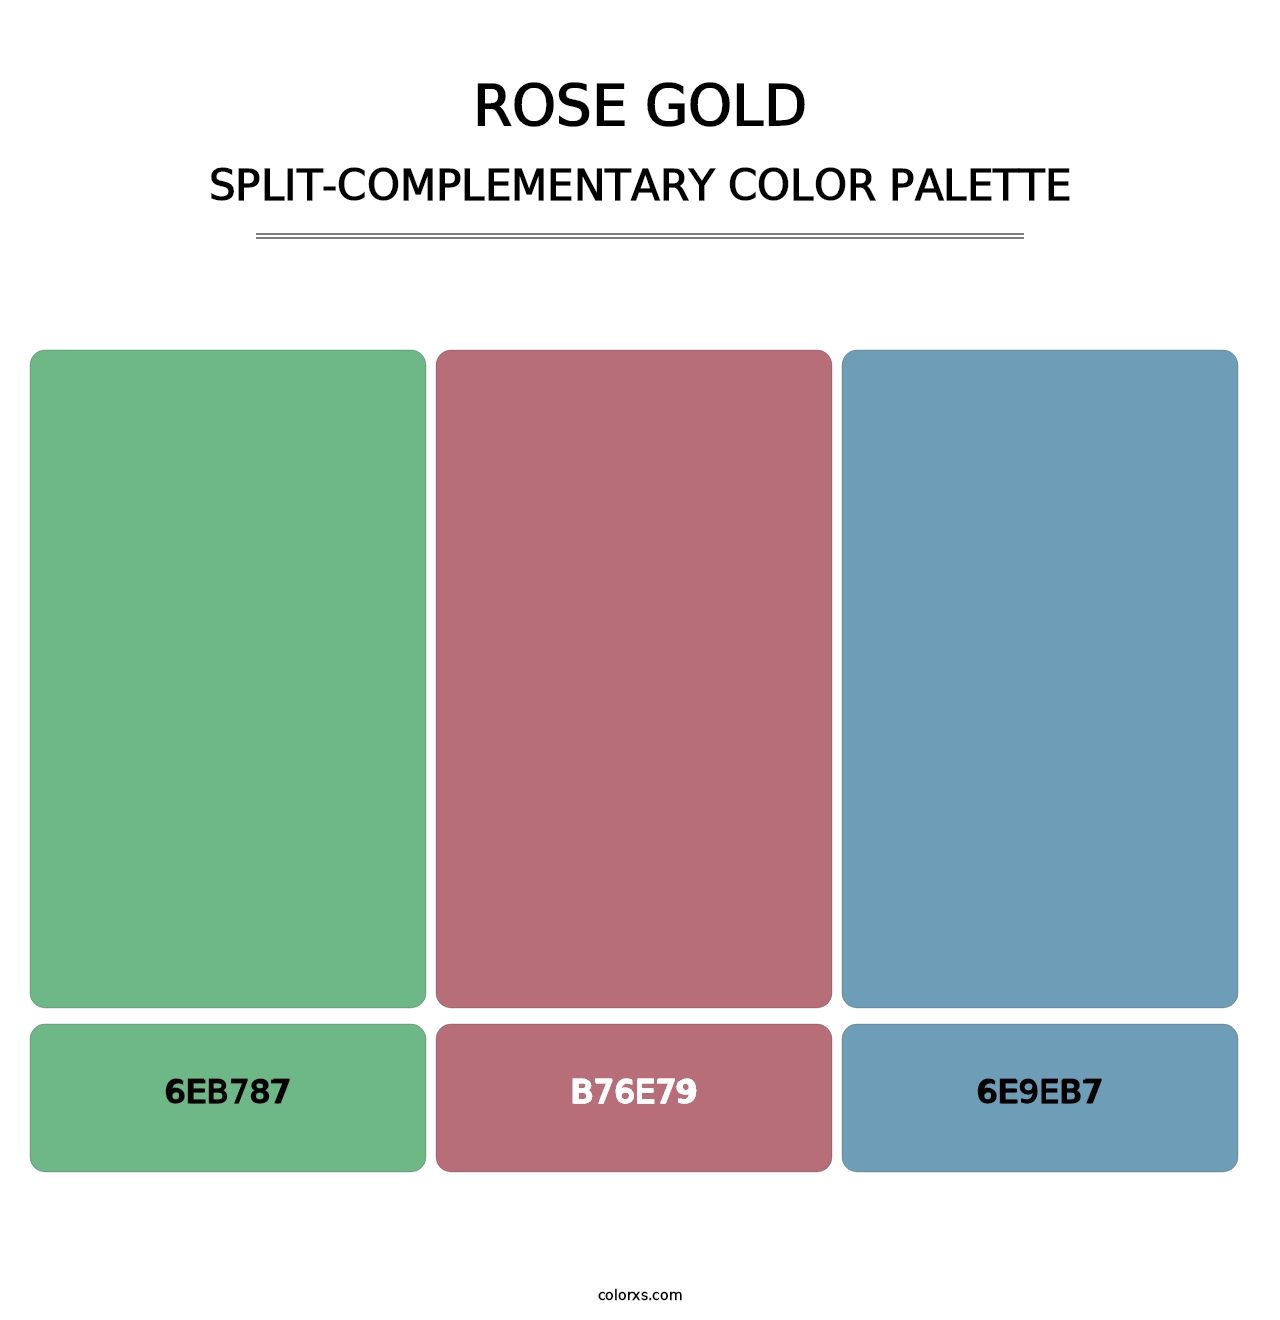 Rose Gold - Split-Complementary Color Palette